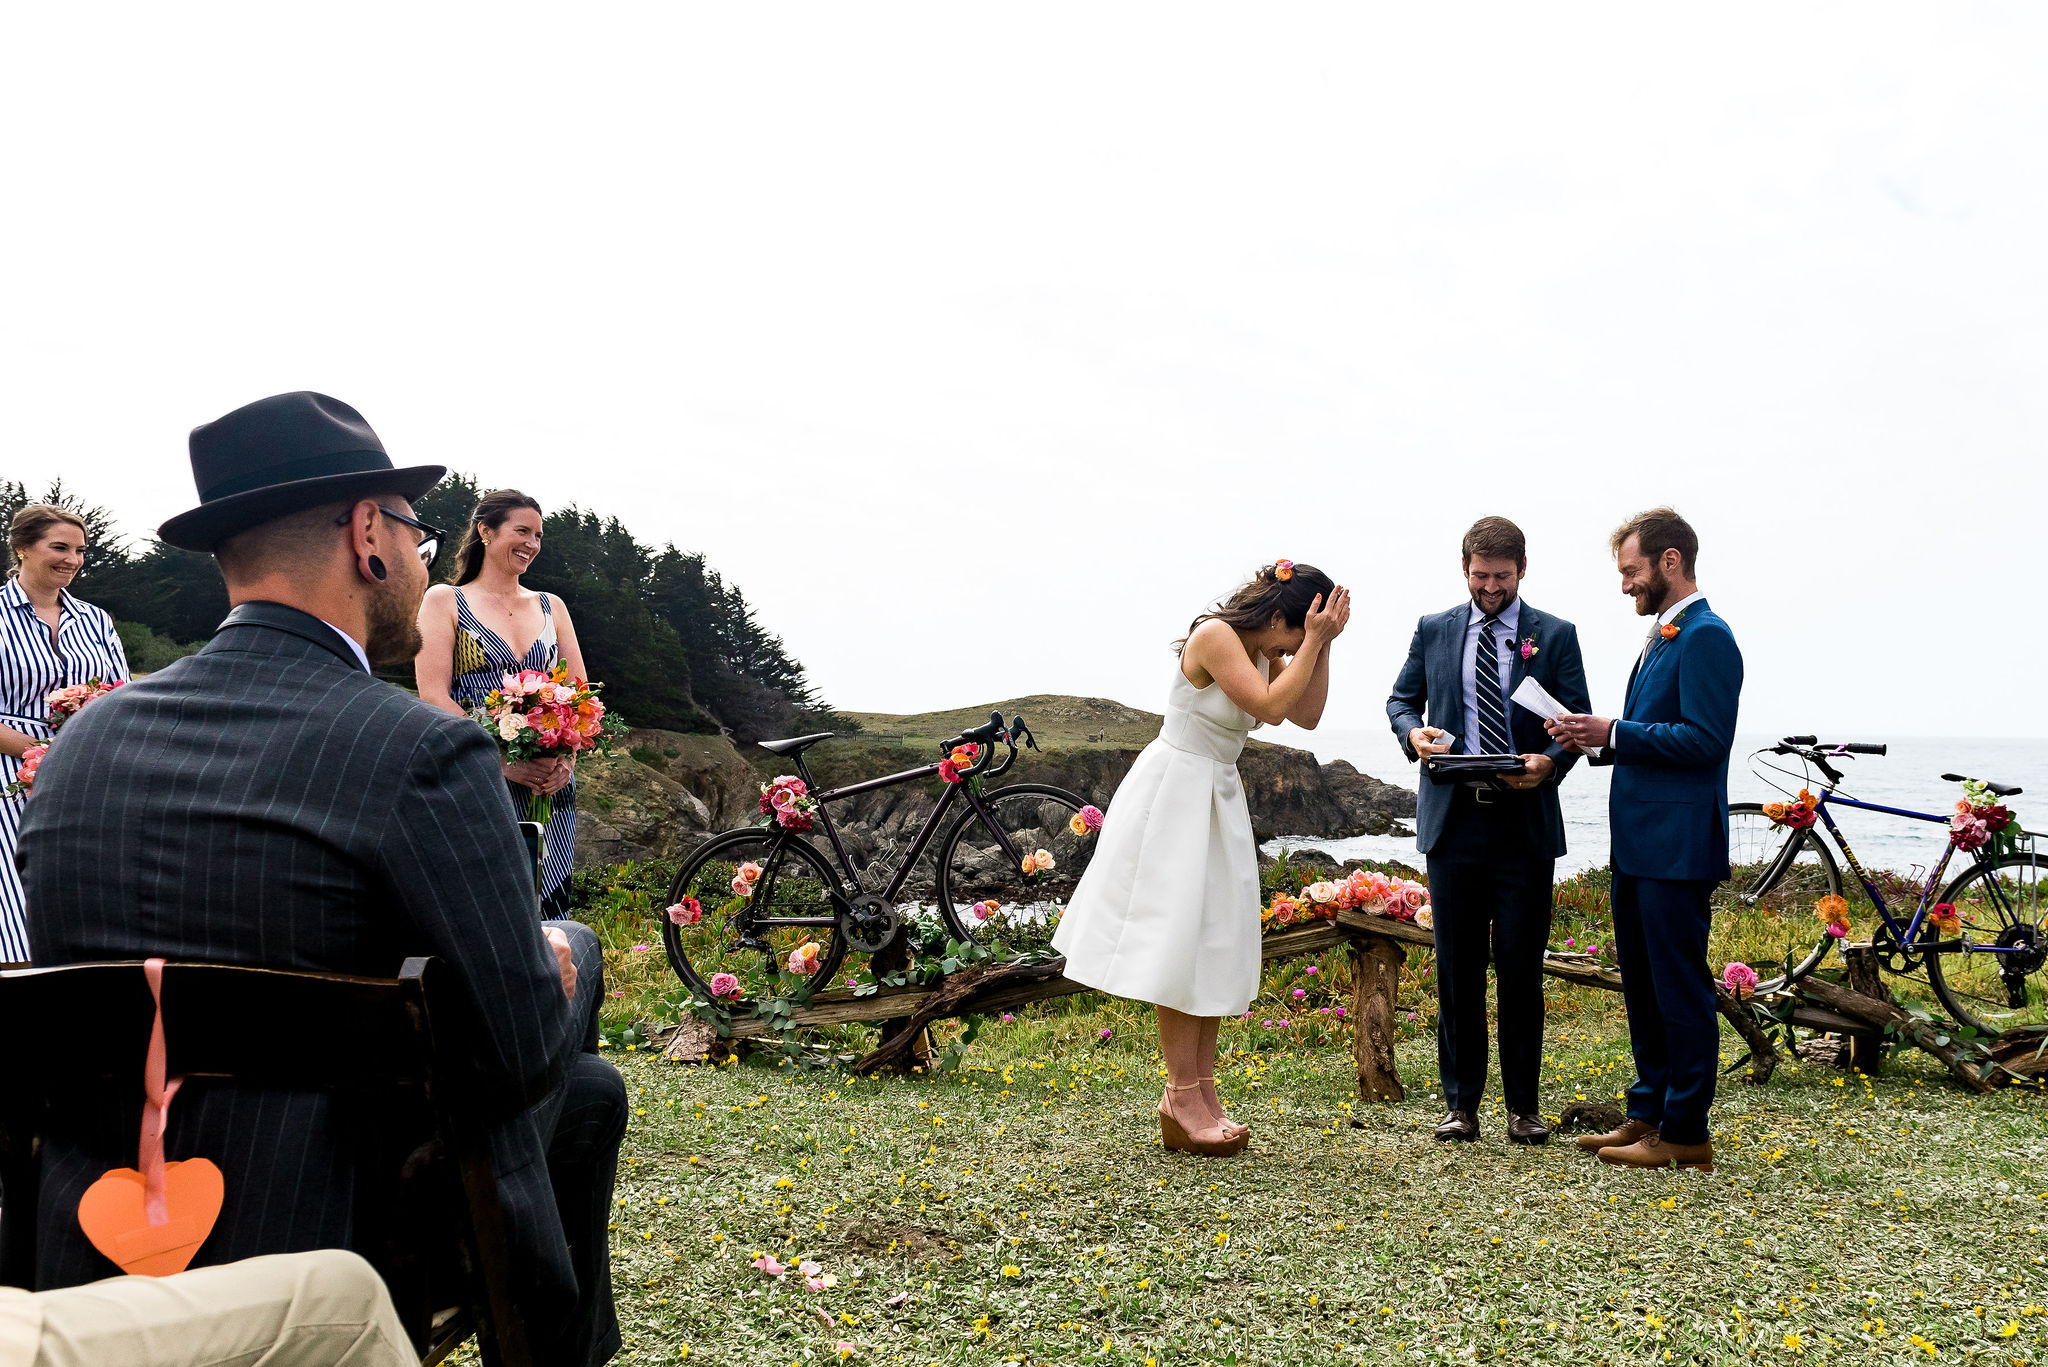 Holly's Ocean Meadow wedding